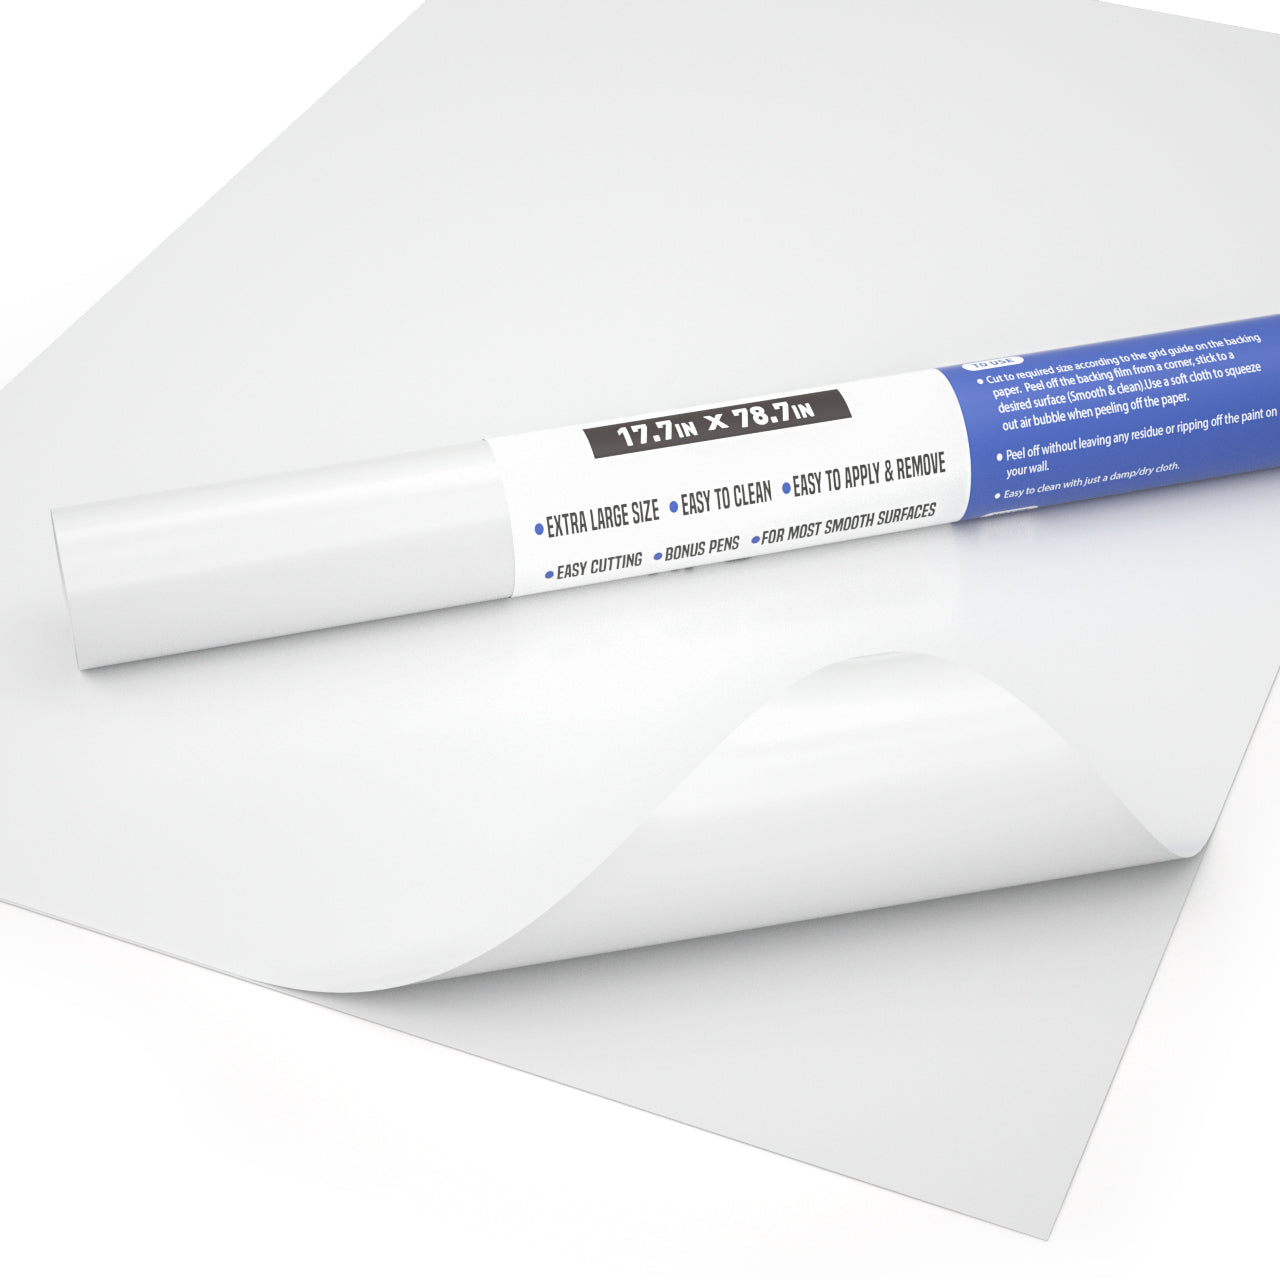 White Board Dry Erase-Whiteboard for Wall-Whiteboard Paper Peel